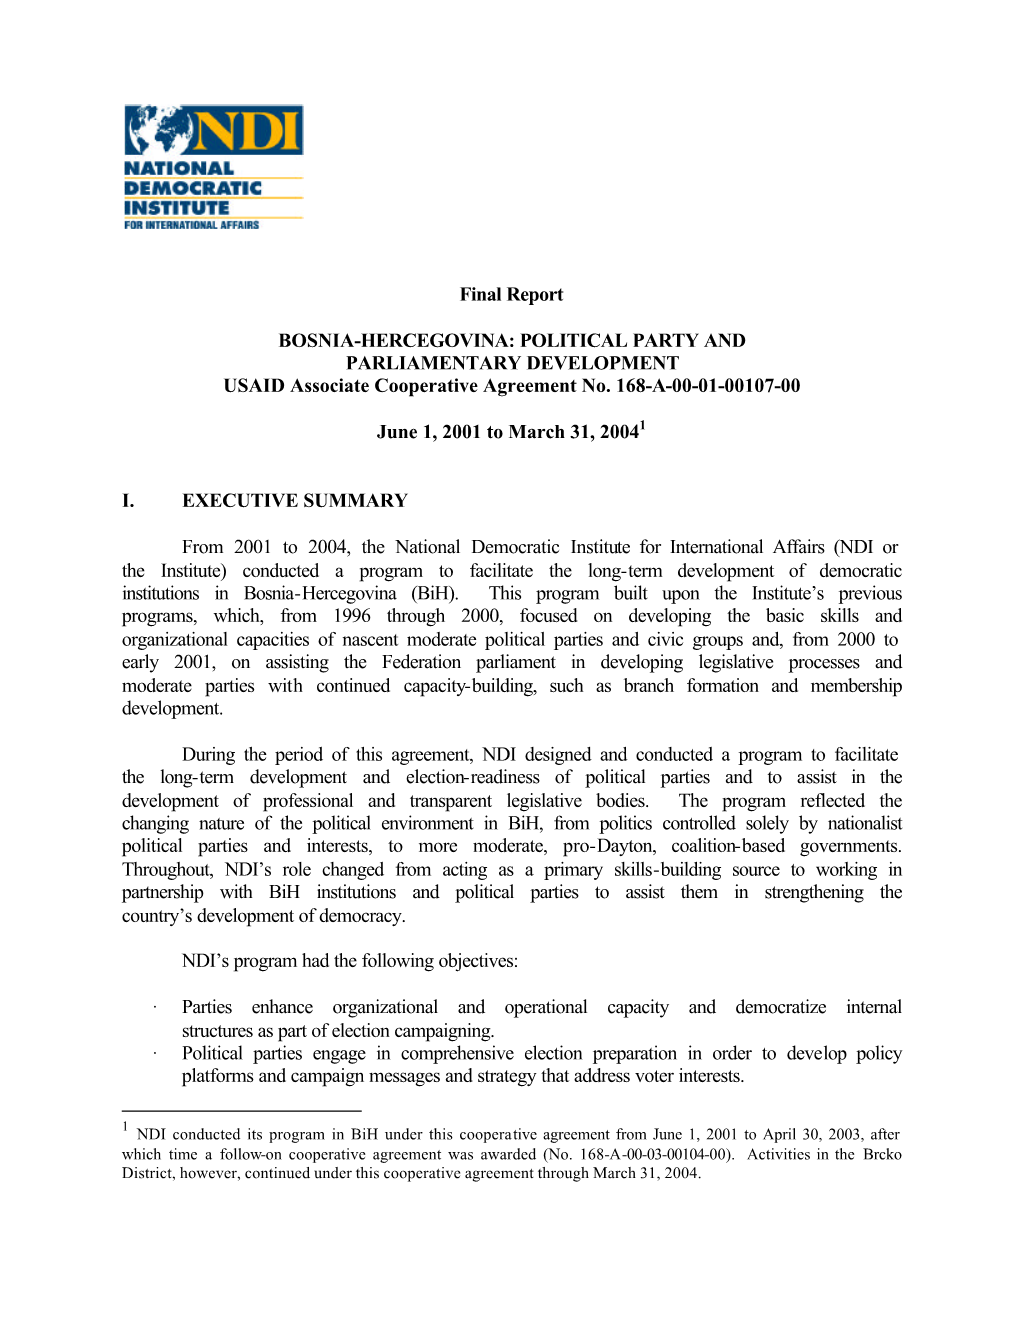 Final Report BOSNIA-HERCEGOVINA: POLITICAL PARTY and PARLIAMENTARY DEVELOPMENT USAID Associate Cooperative Agreement No. 168-A-0